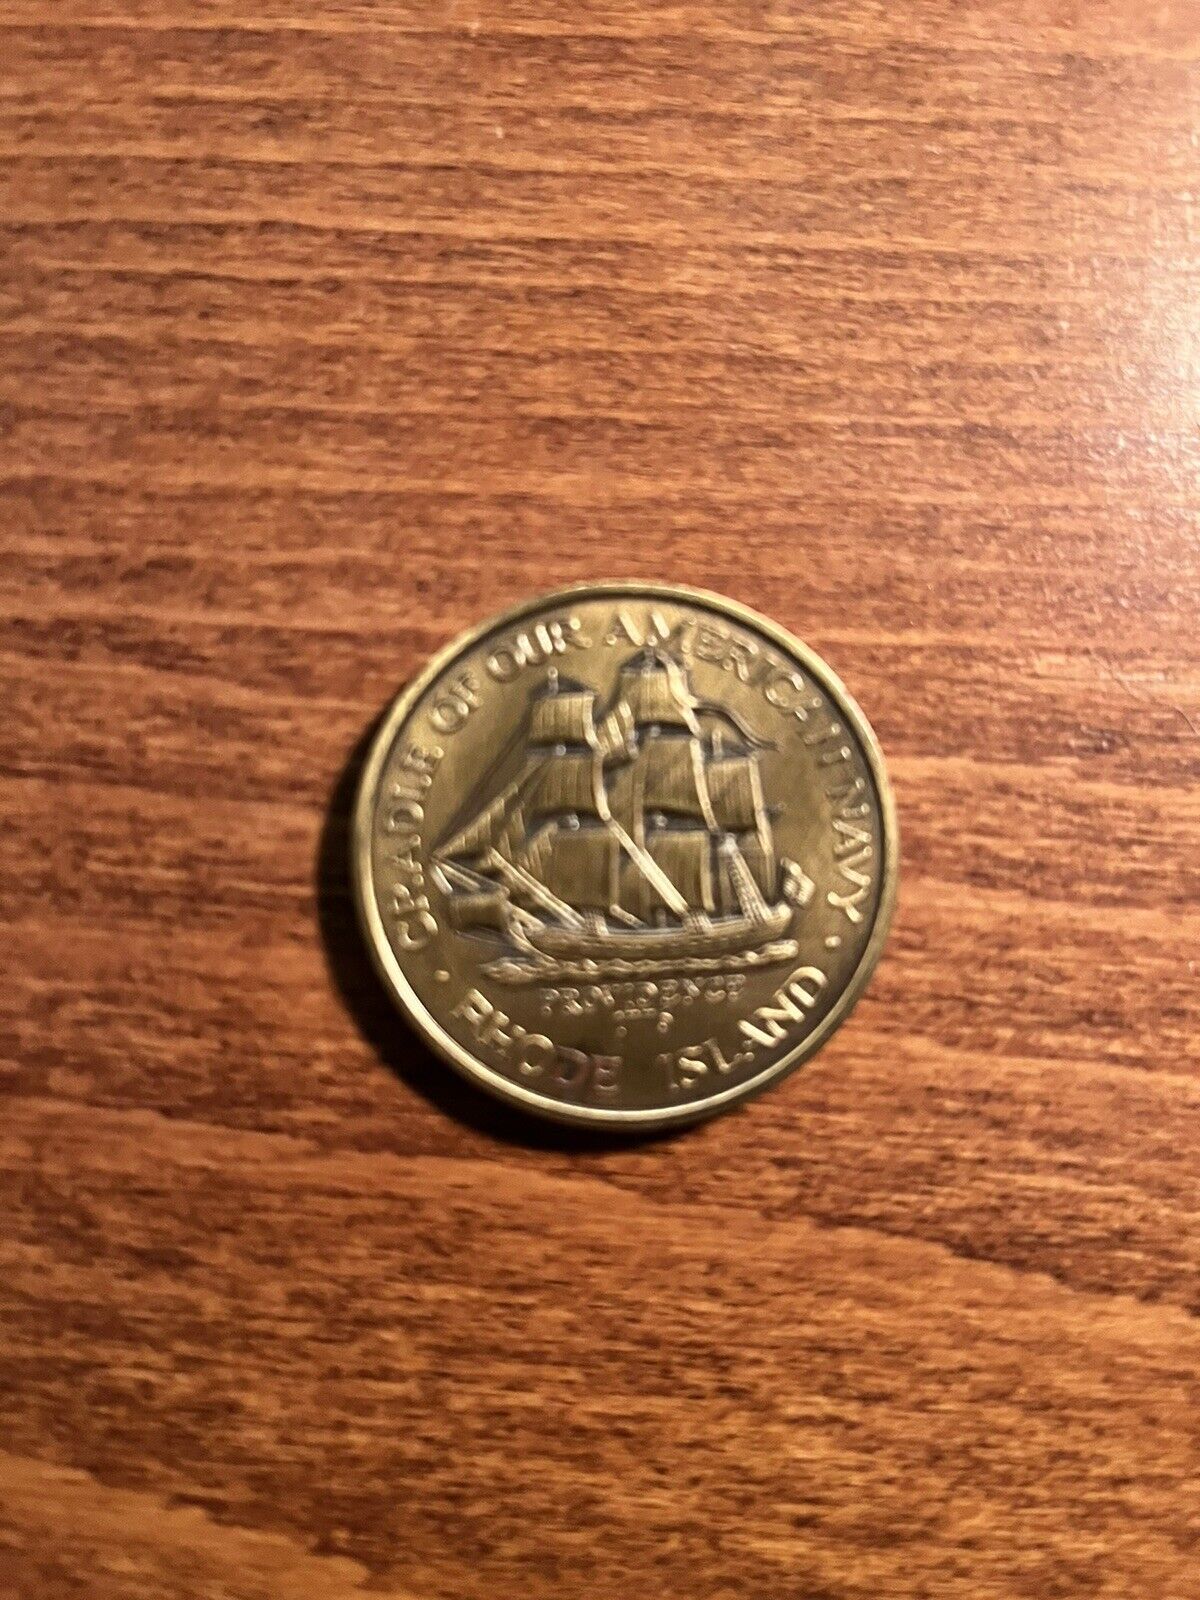 Rhode Island Bicentennial Commemorative Coin - RI76 - Navy